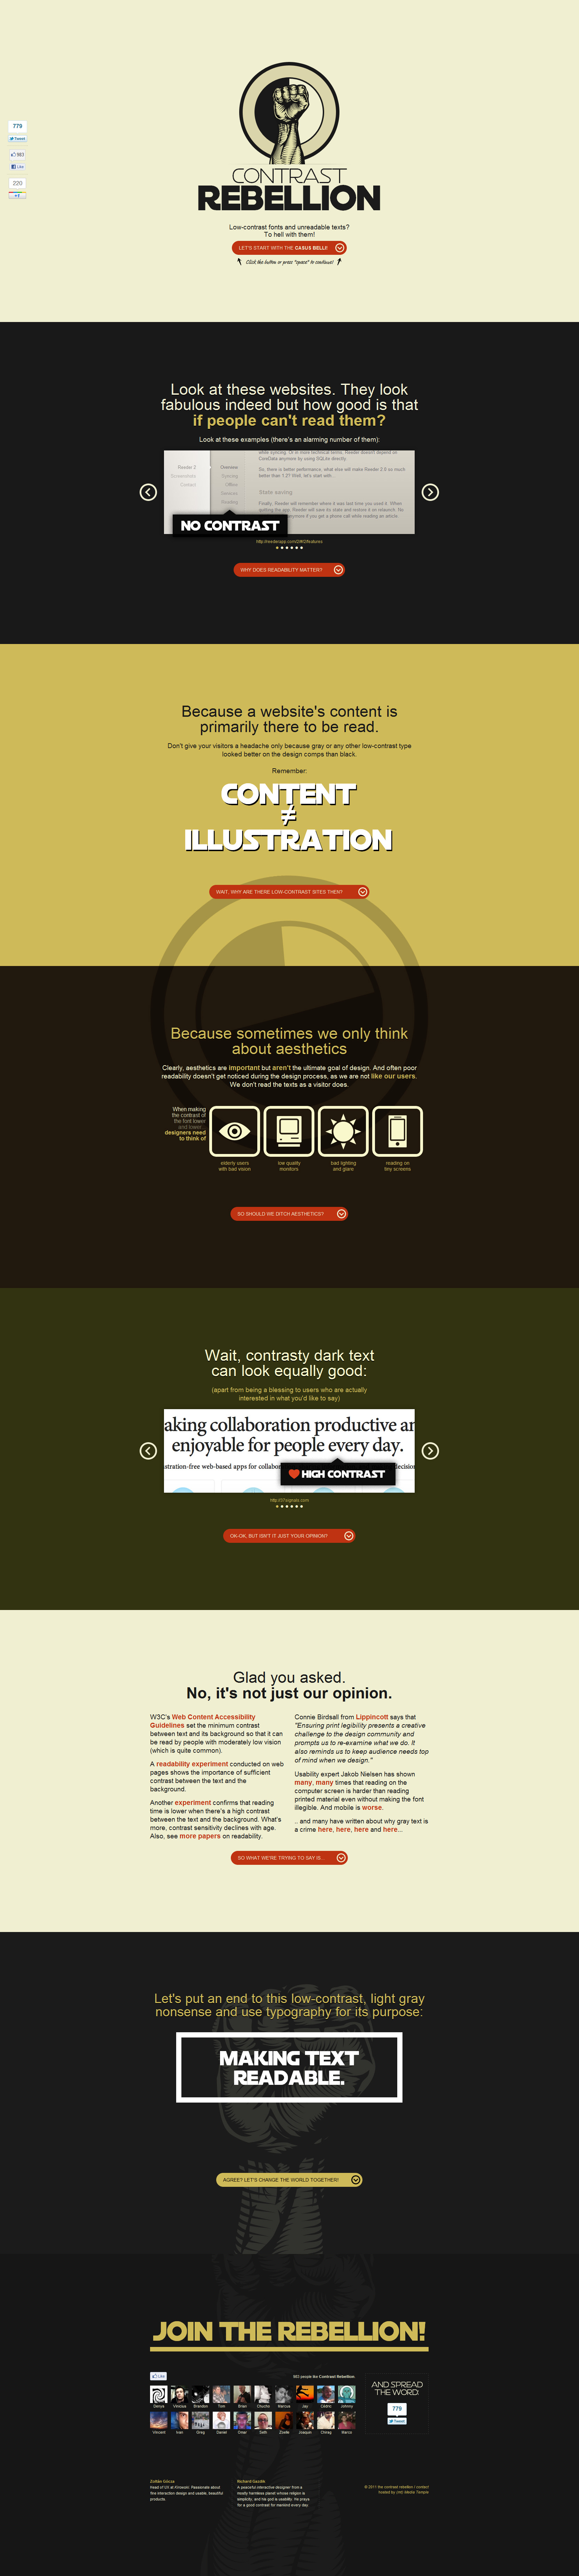 Contrast Rebellion Website Screenshot